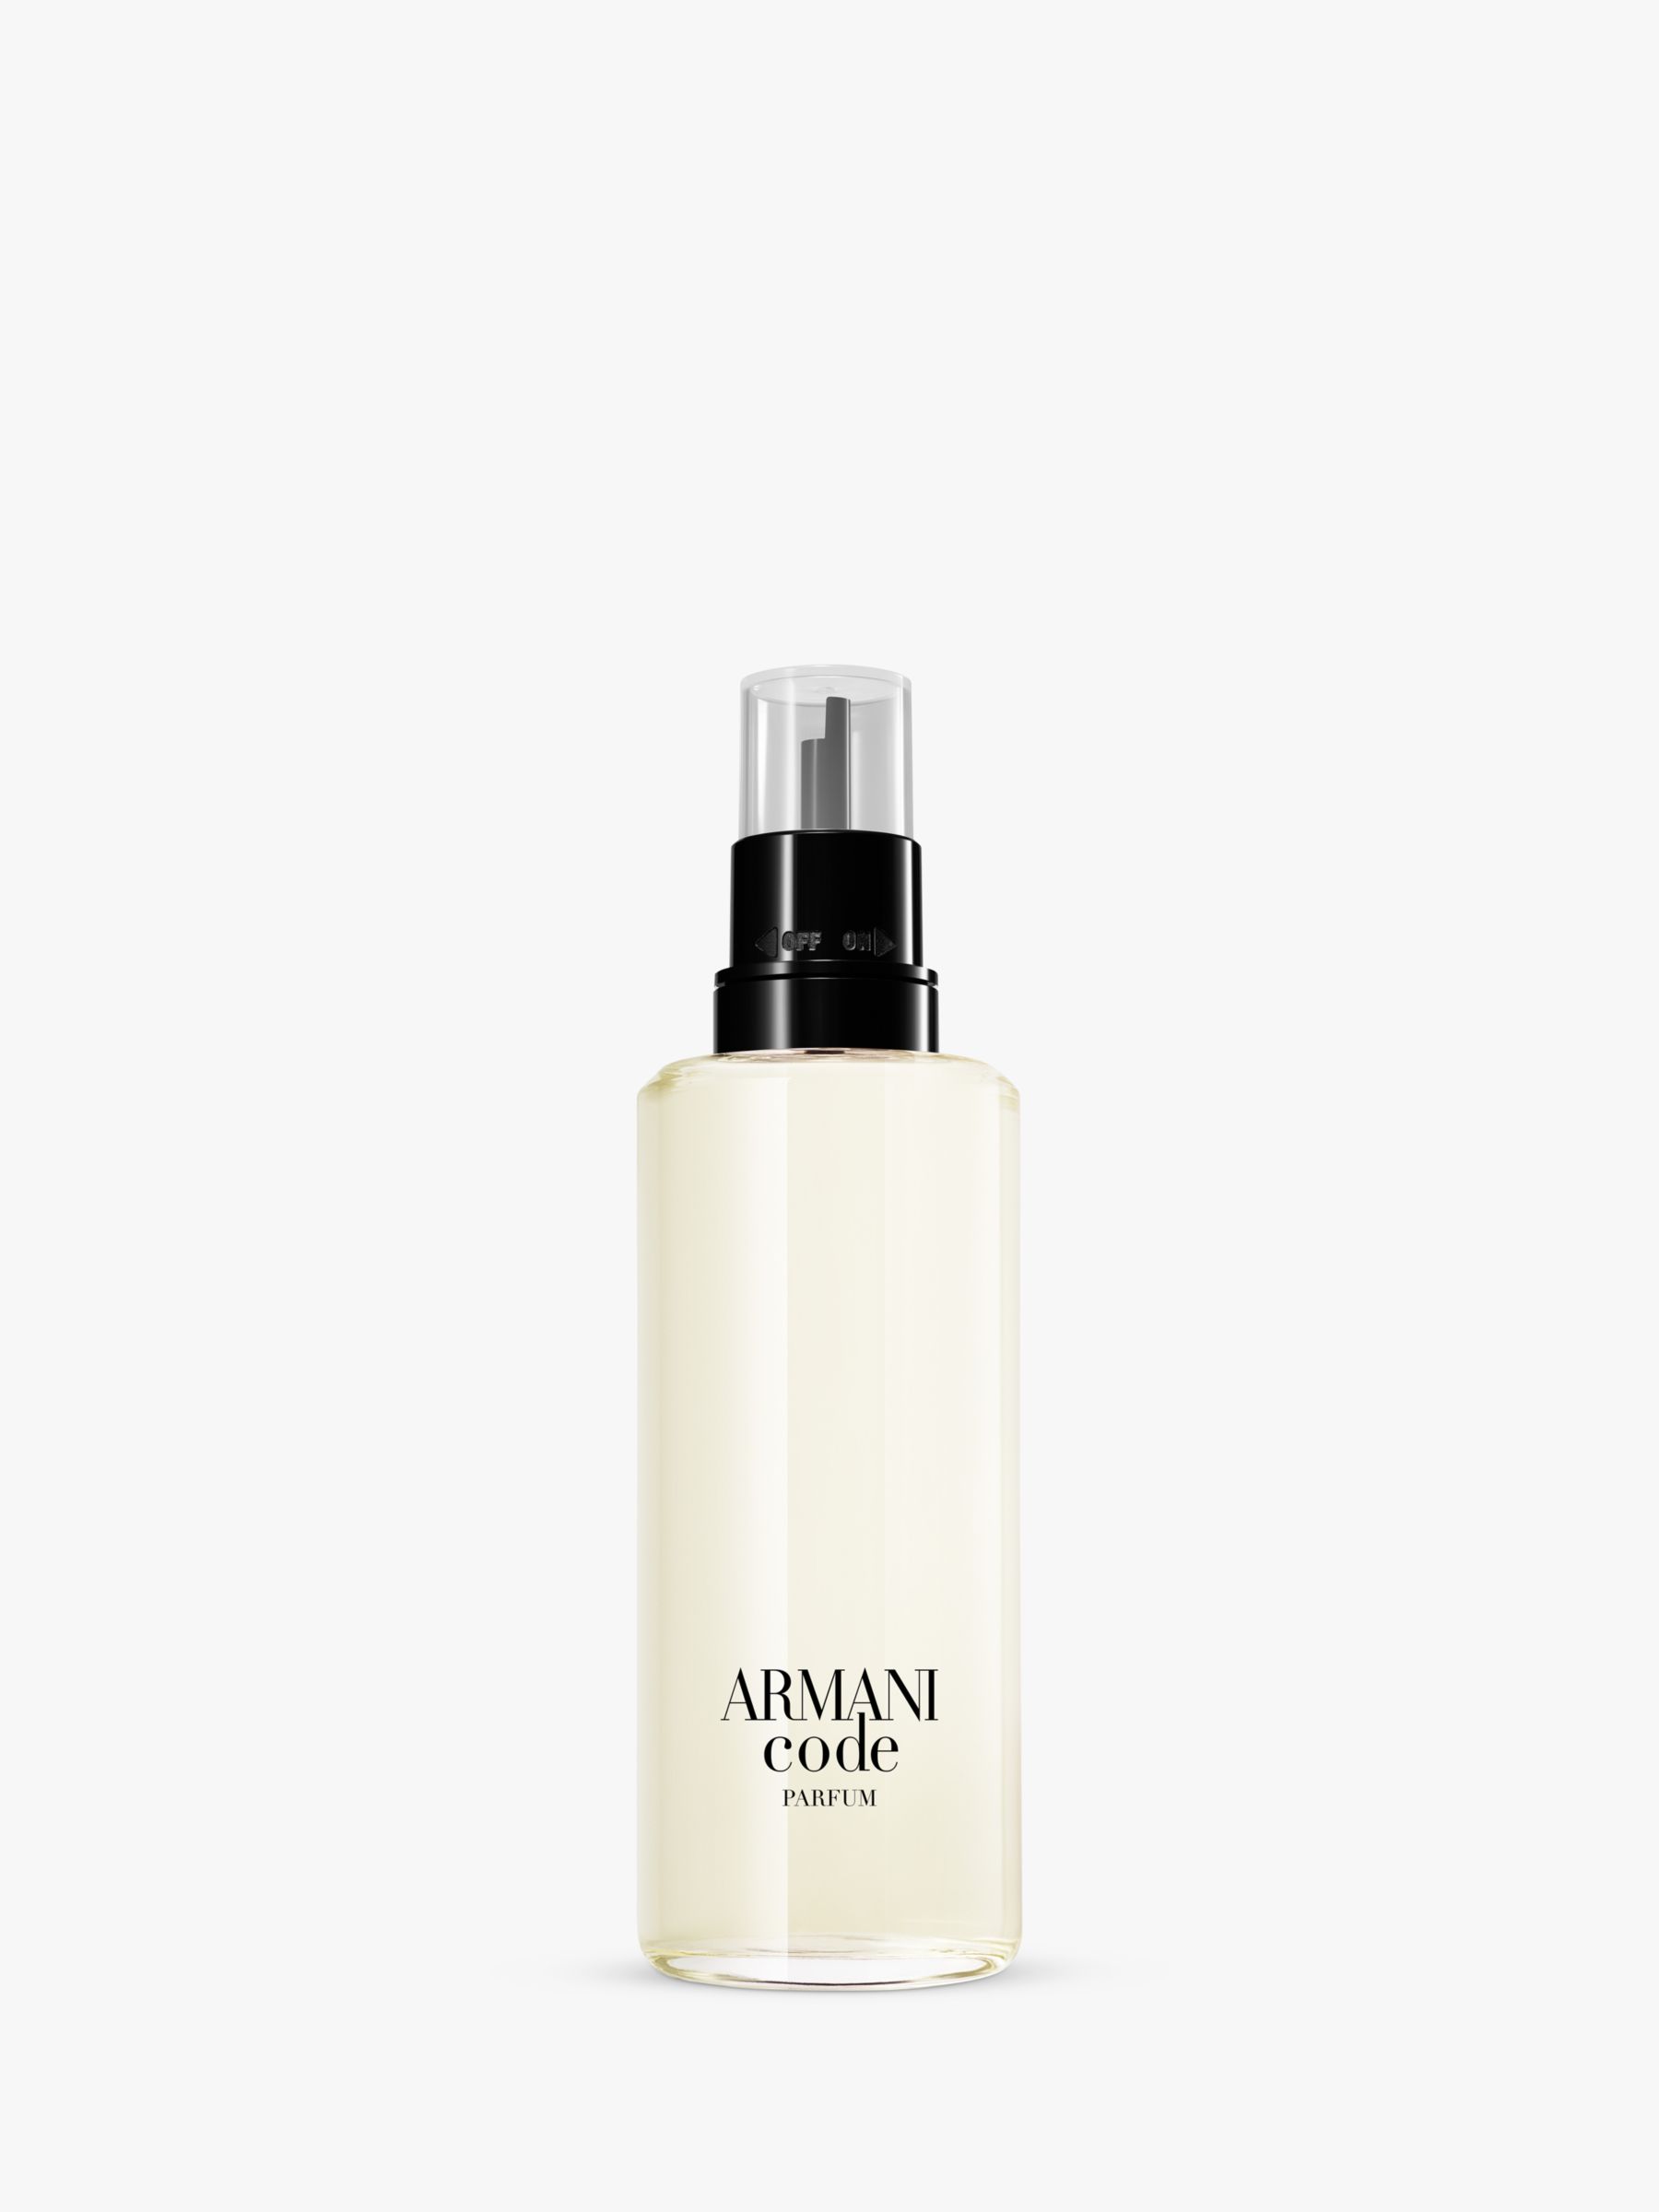 Giorgio Armani Code Le Parfum Eau de Parfum Refill, 150ml 1